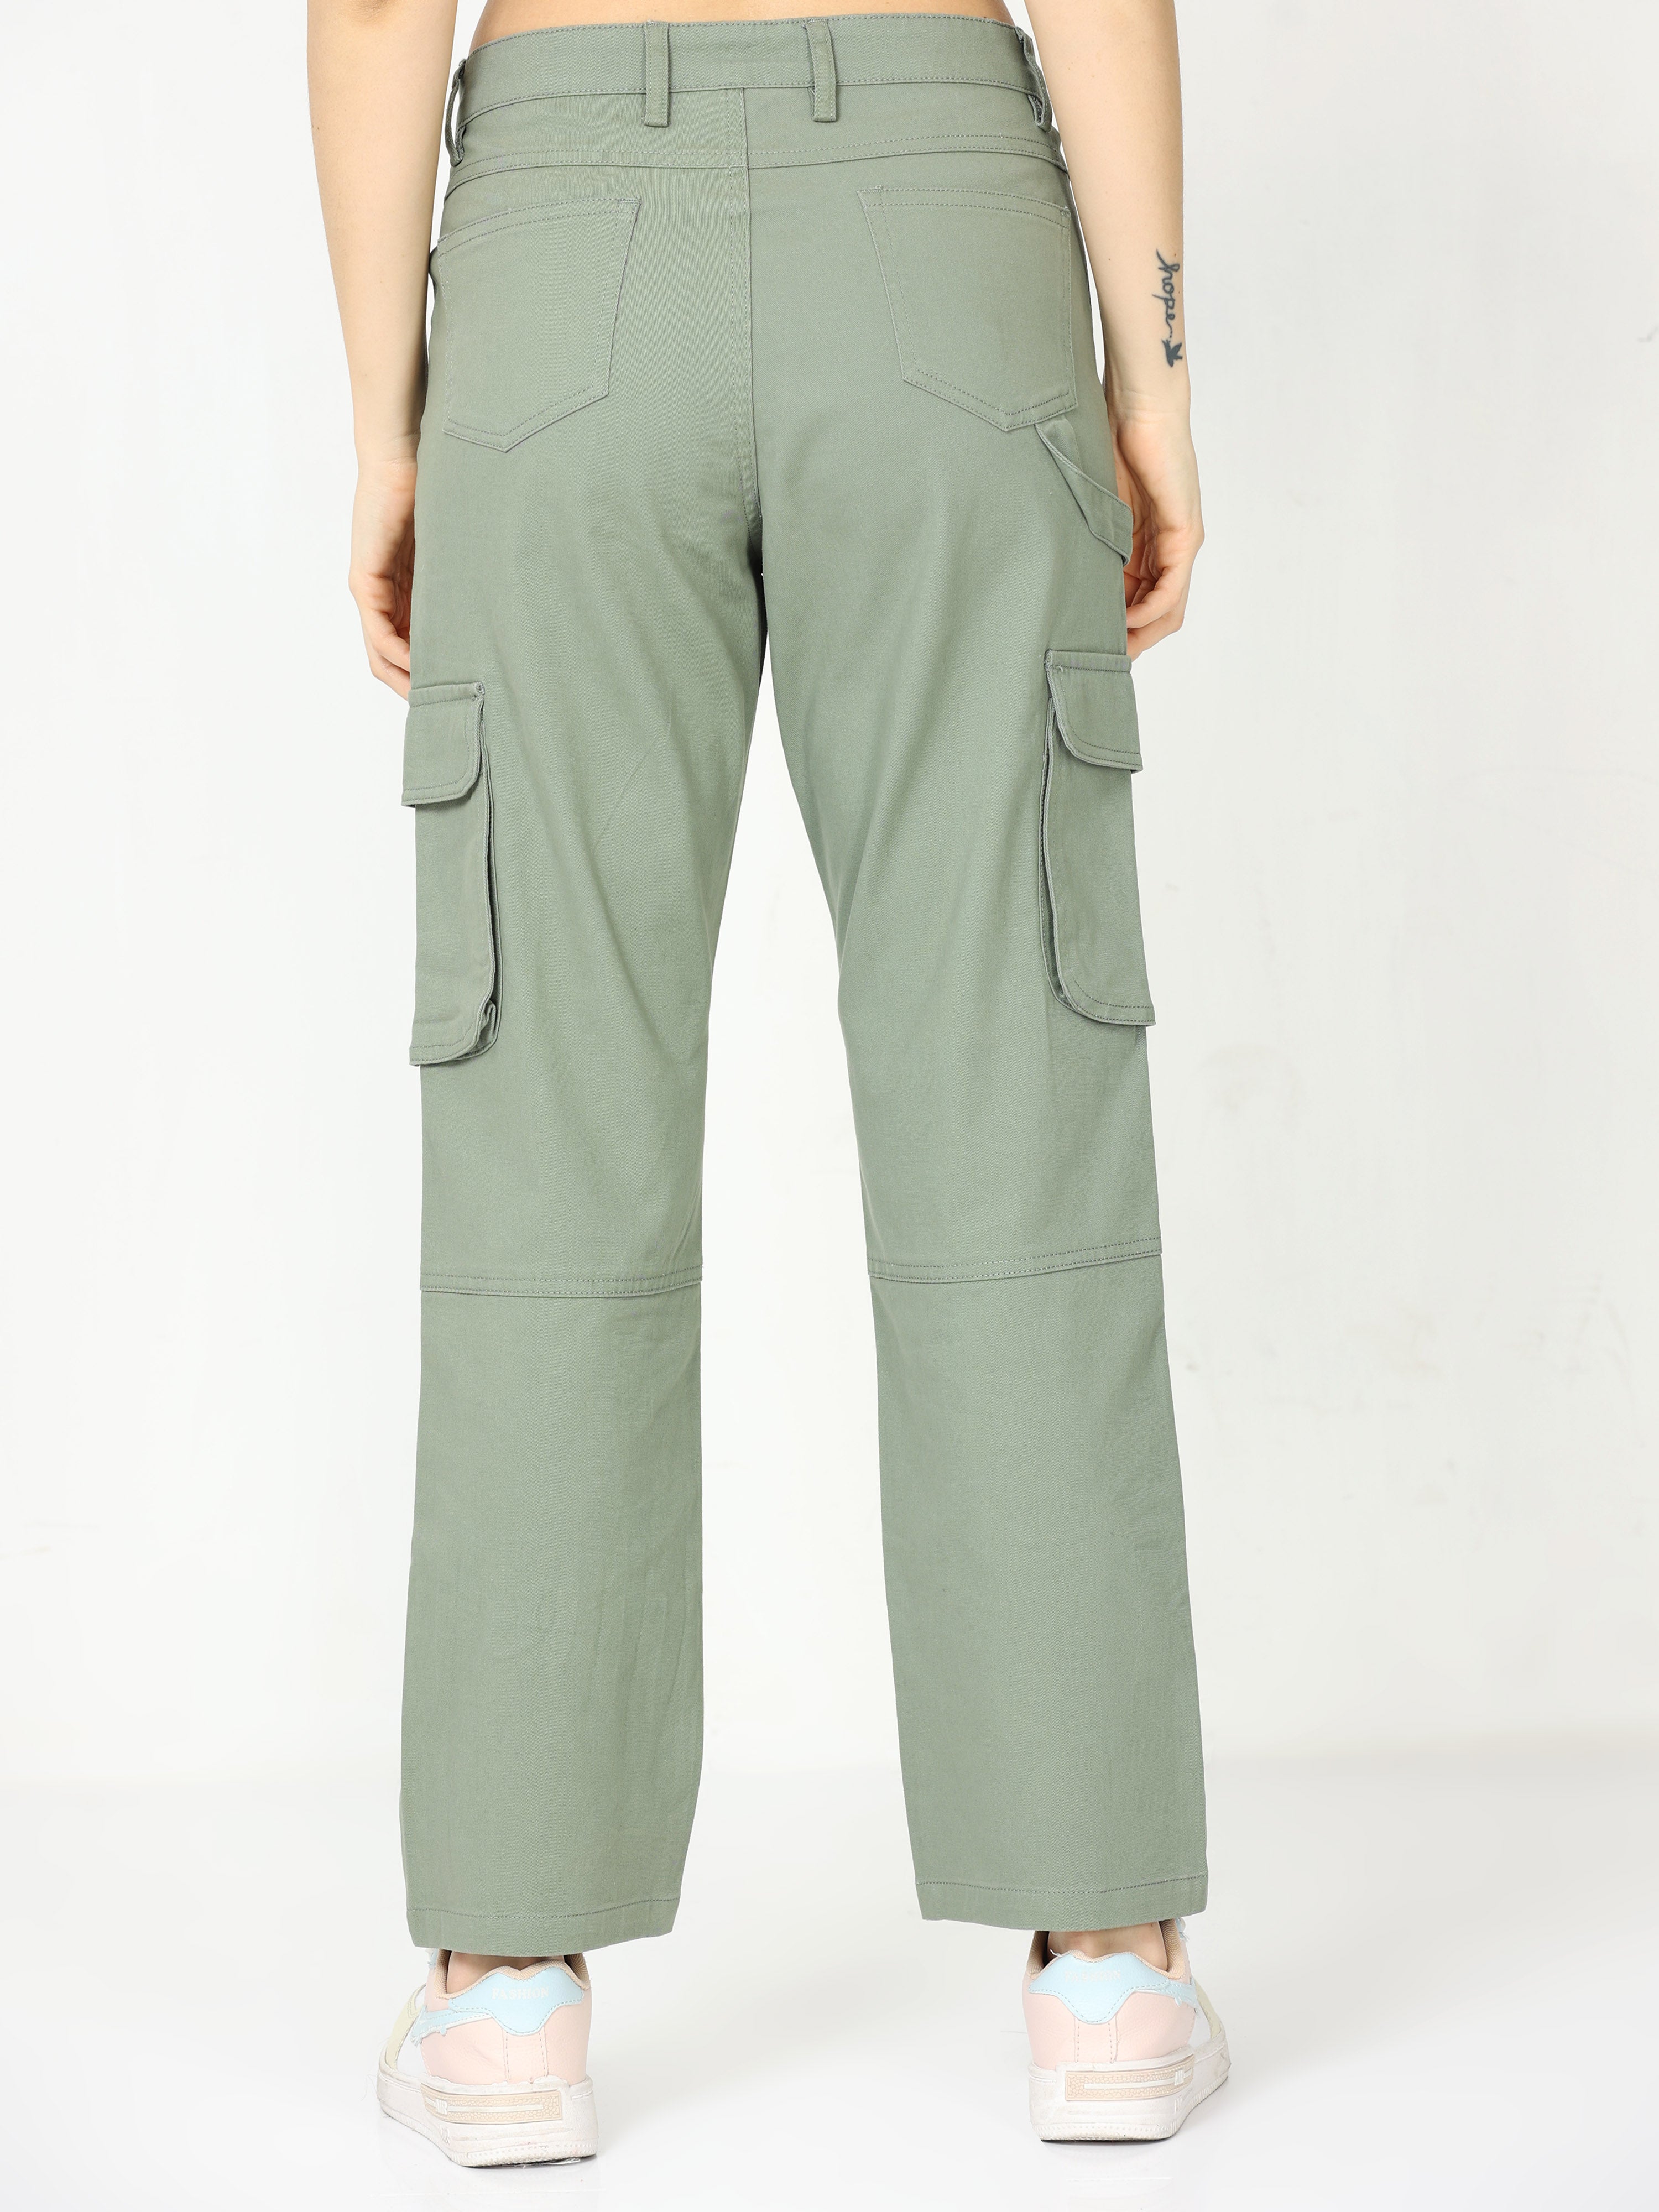 Aayomet Women's Pants Women's Wear Multi Waist Three Pocket Trousers Waist Cargo  Pants Casual Pants Long Yoga Pants,Mint Green L - Walmart.com